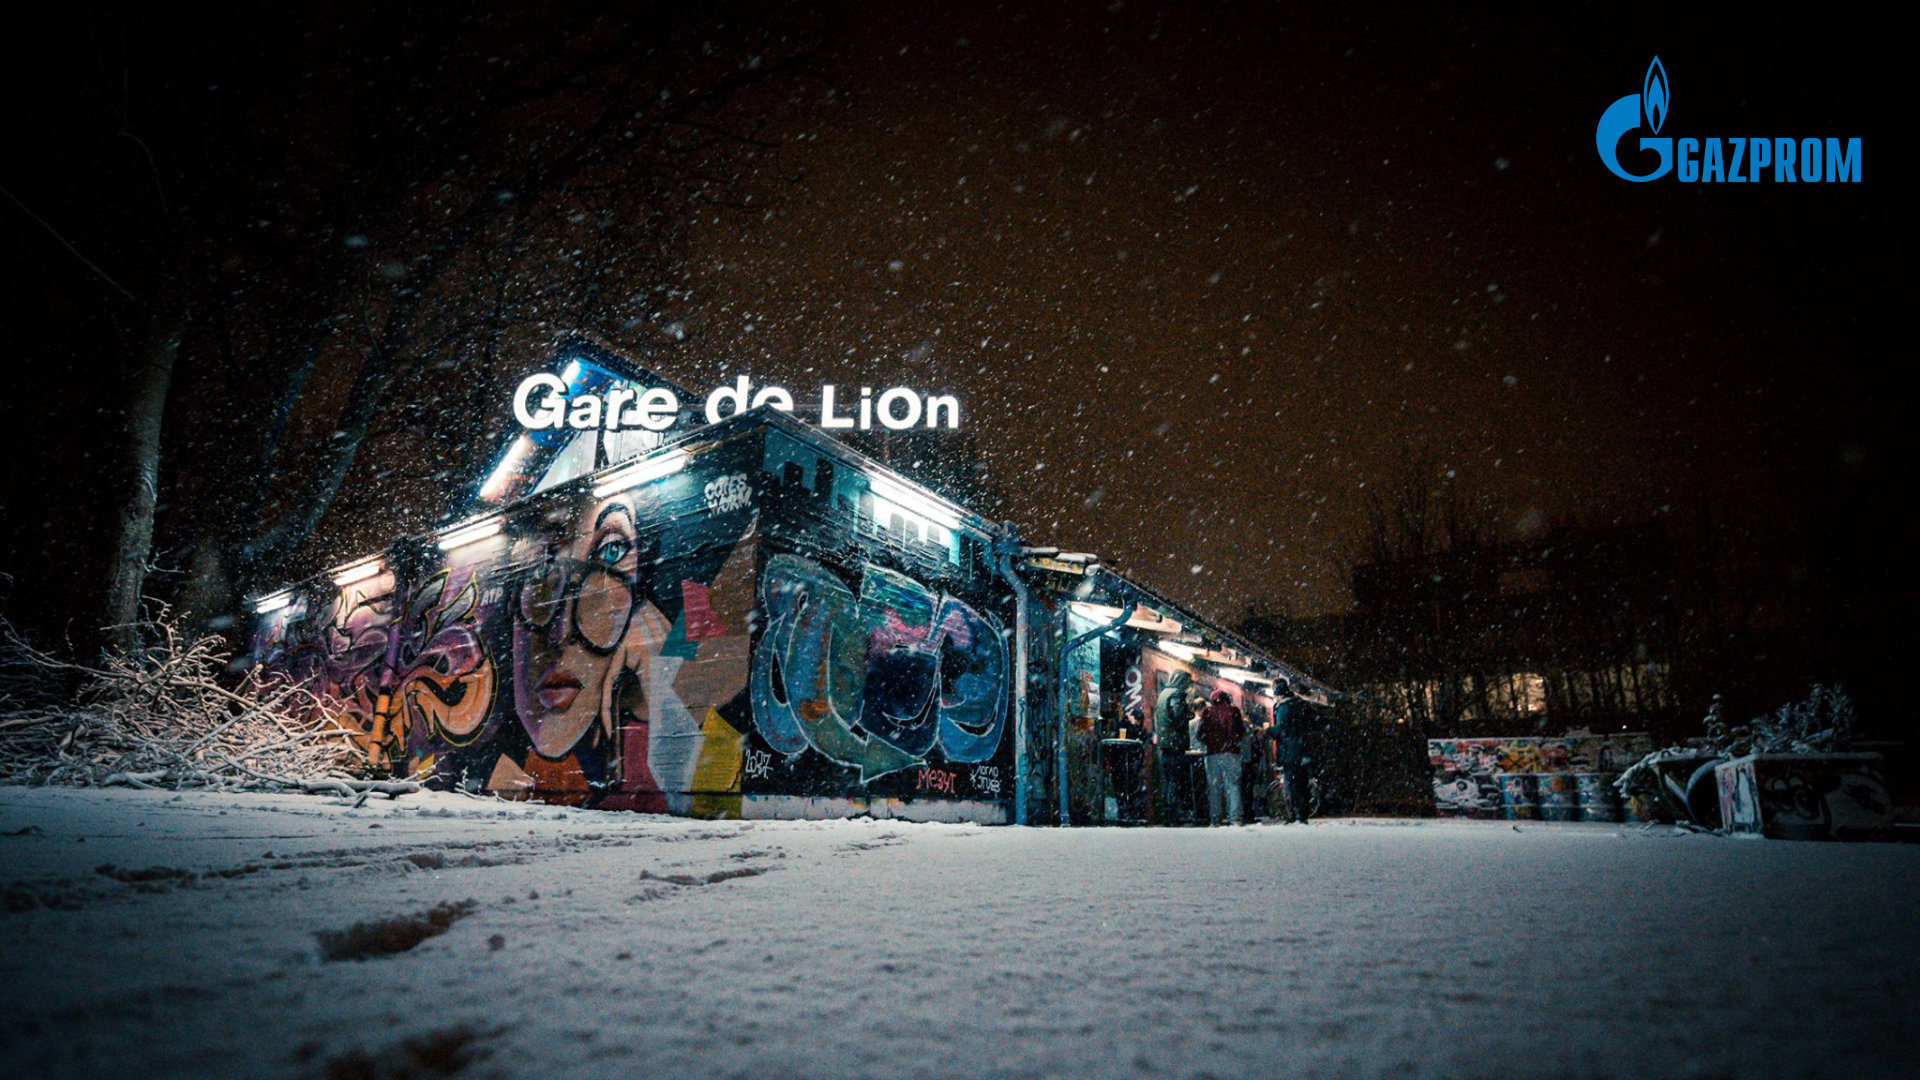 Gare de Lion mit neuem Naming Right Sponsor